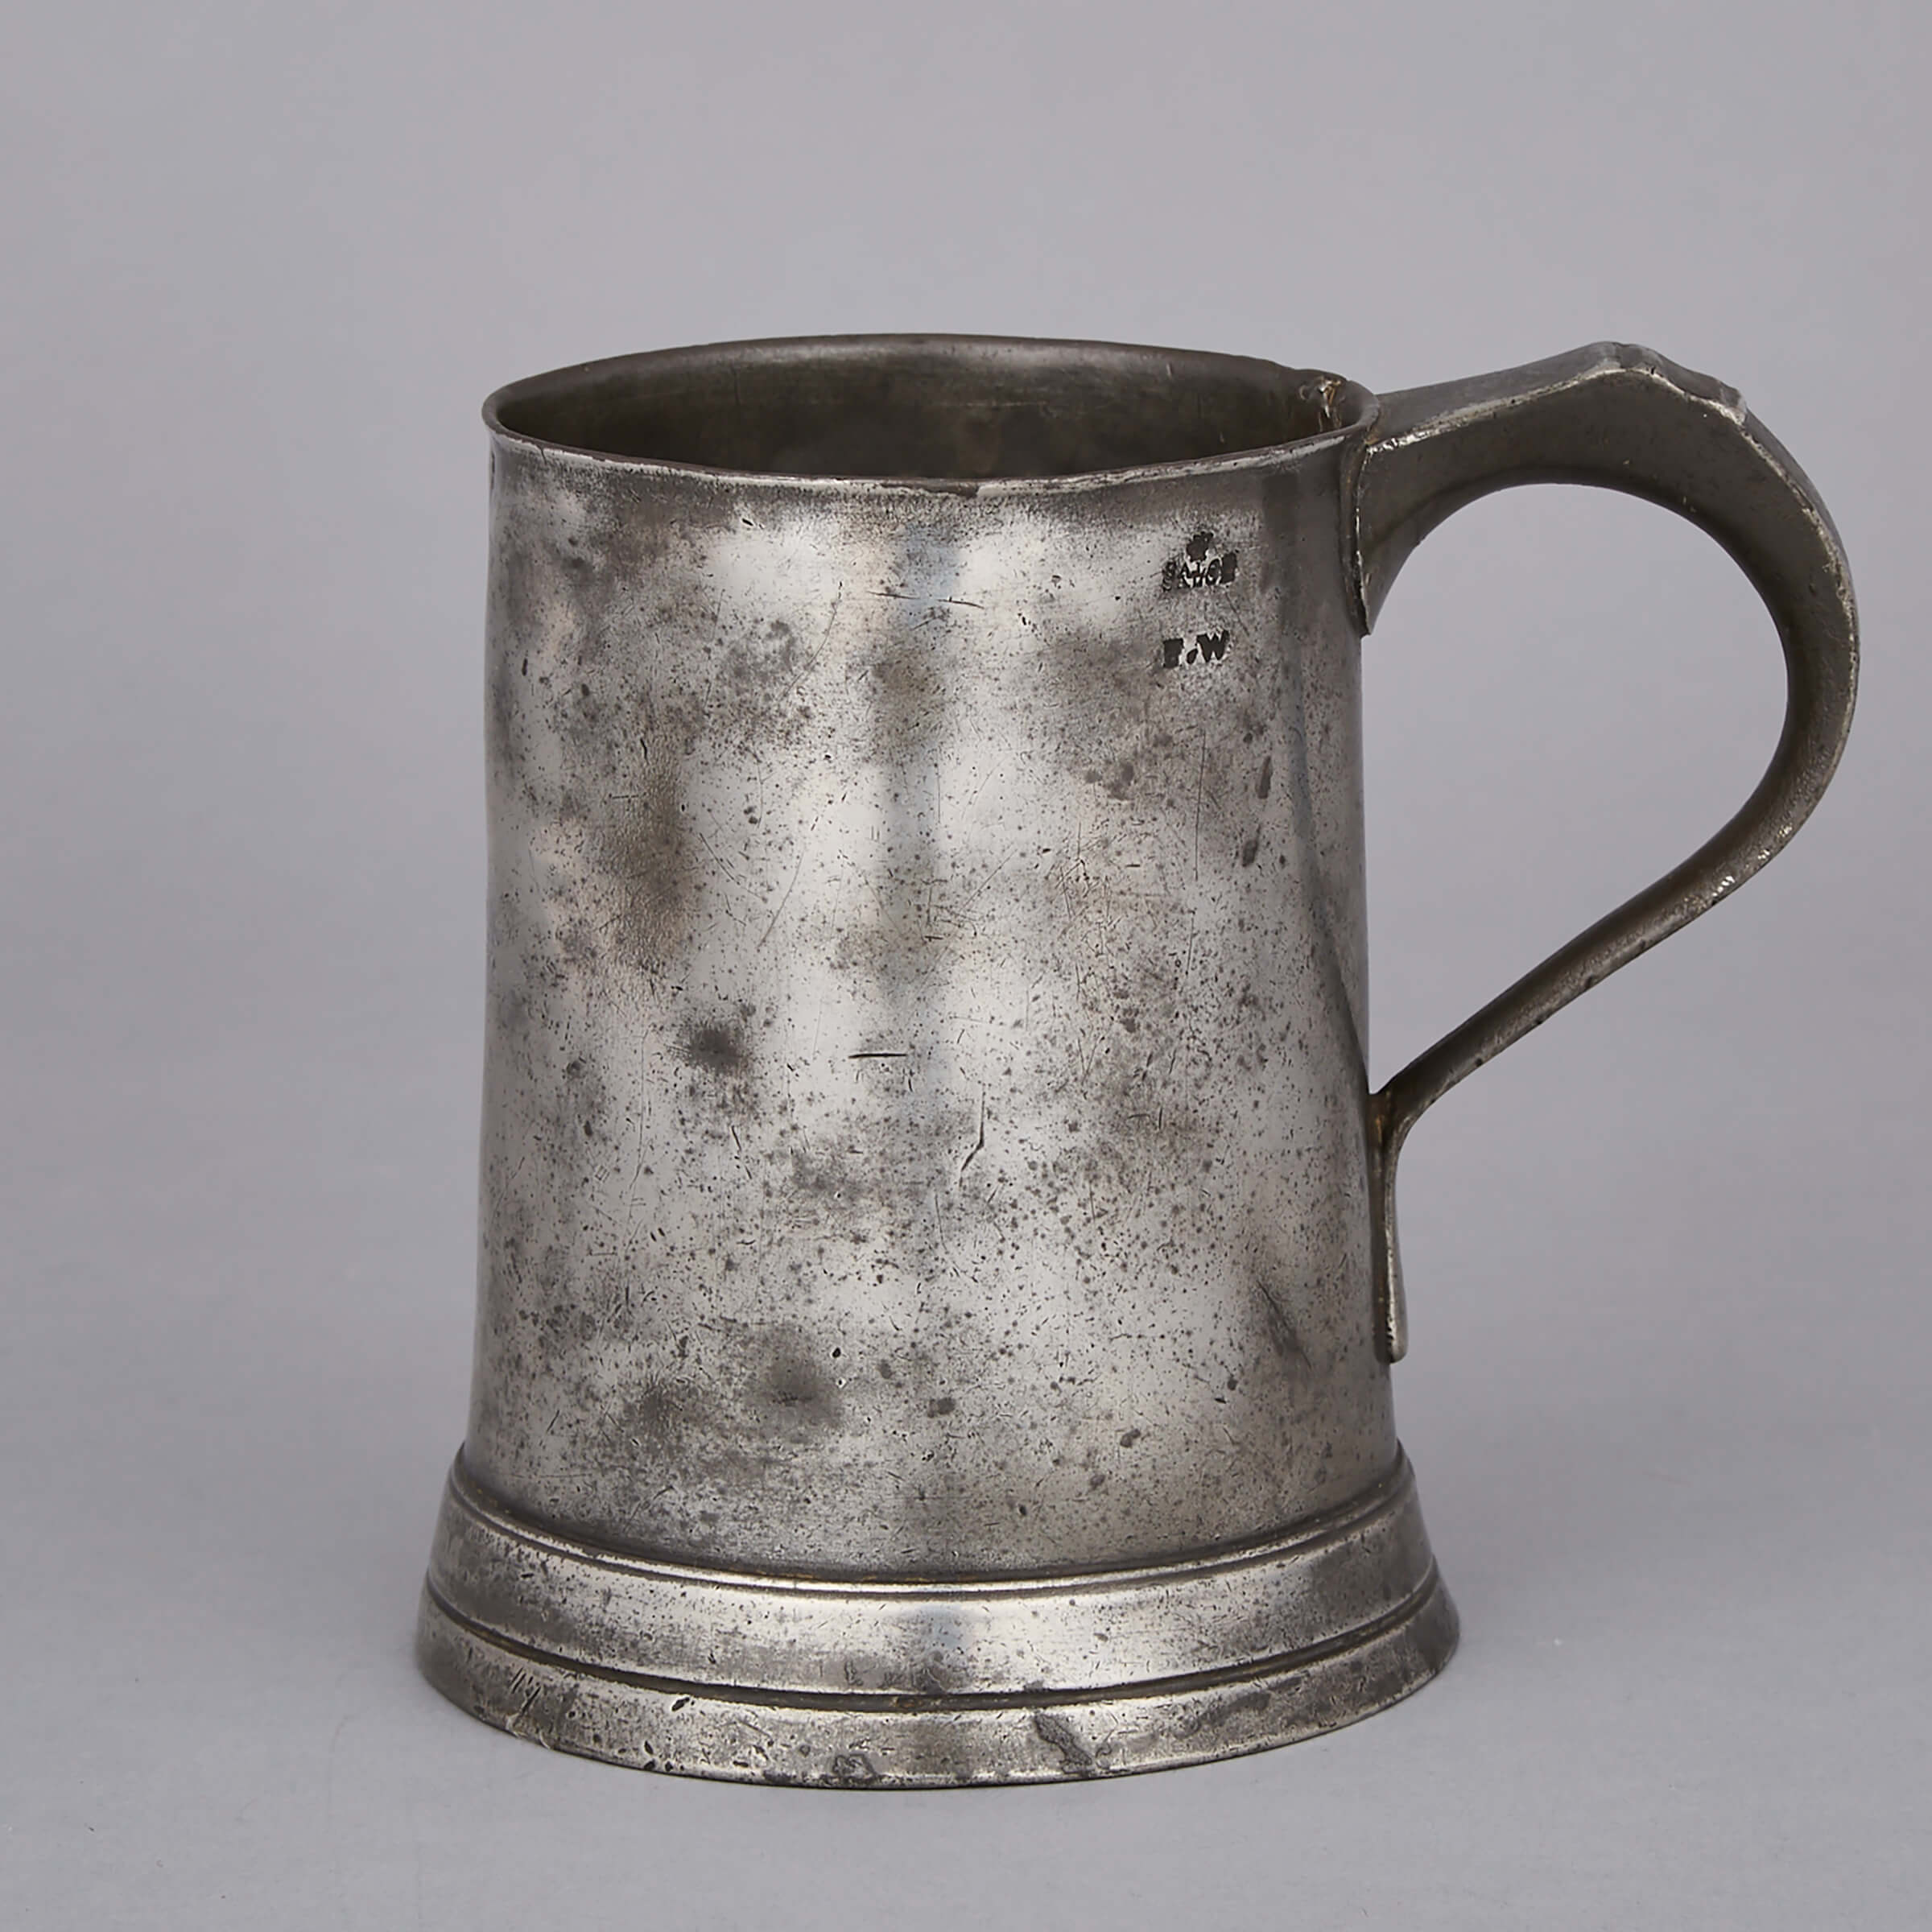 English Pewter OEAS Quart Mug, Samuel Harrop, Shrewsbury, mid 18th century